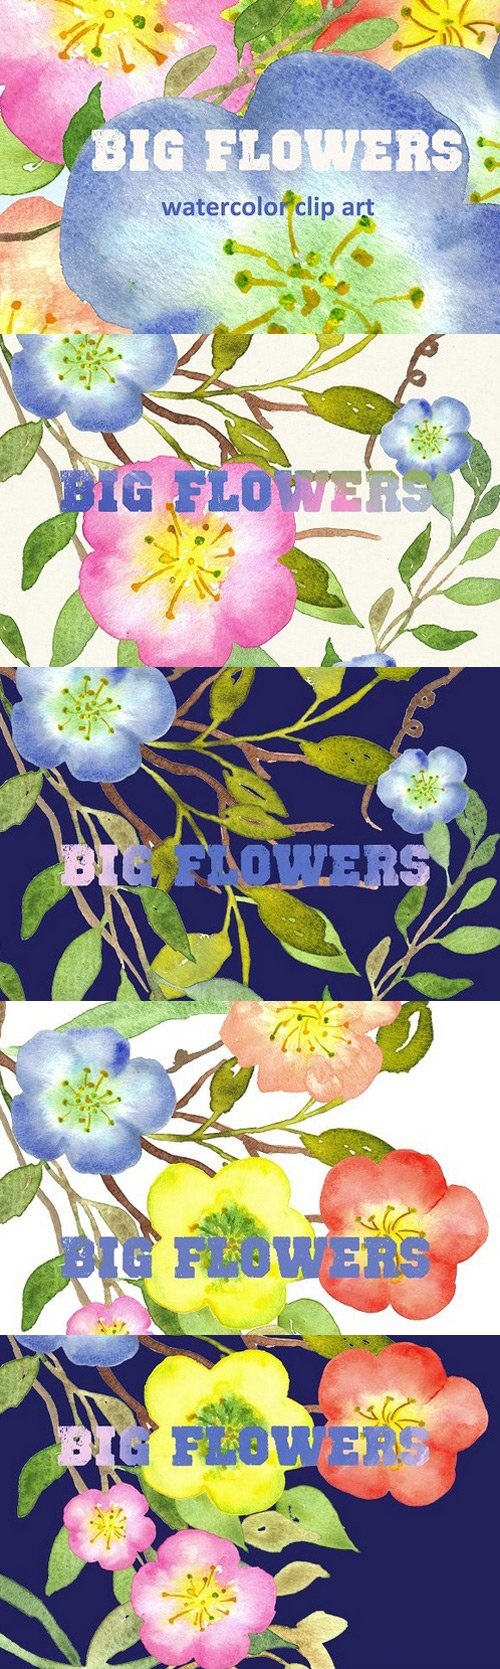 Big Flowers watercolor clip art 256589